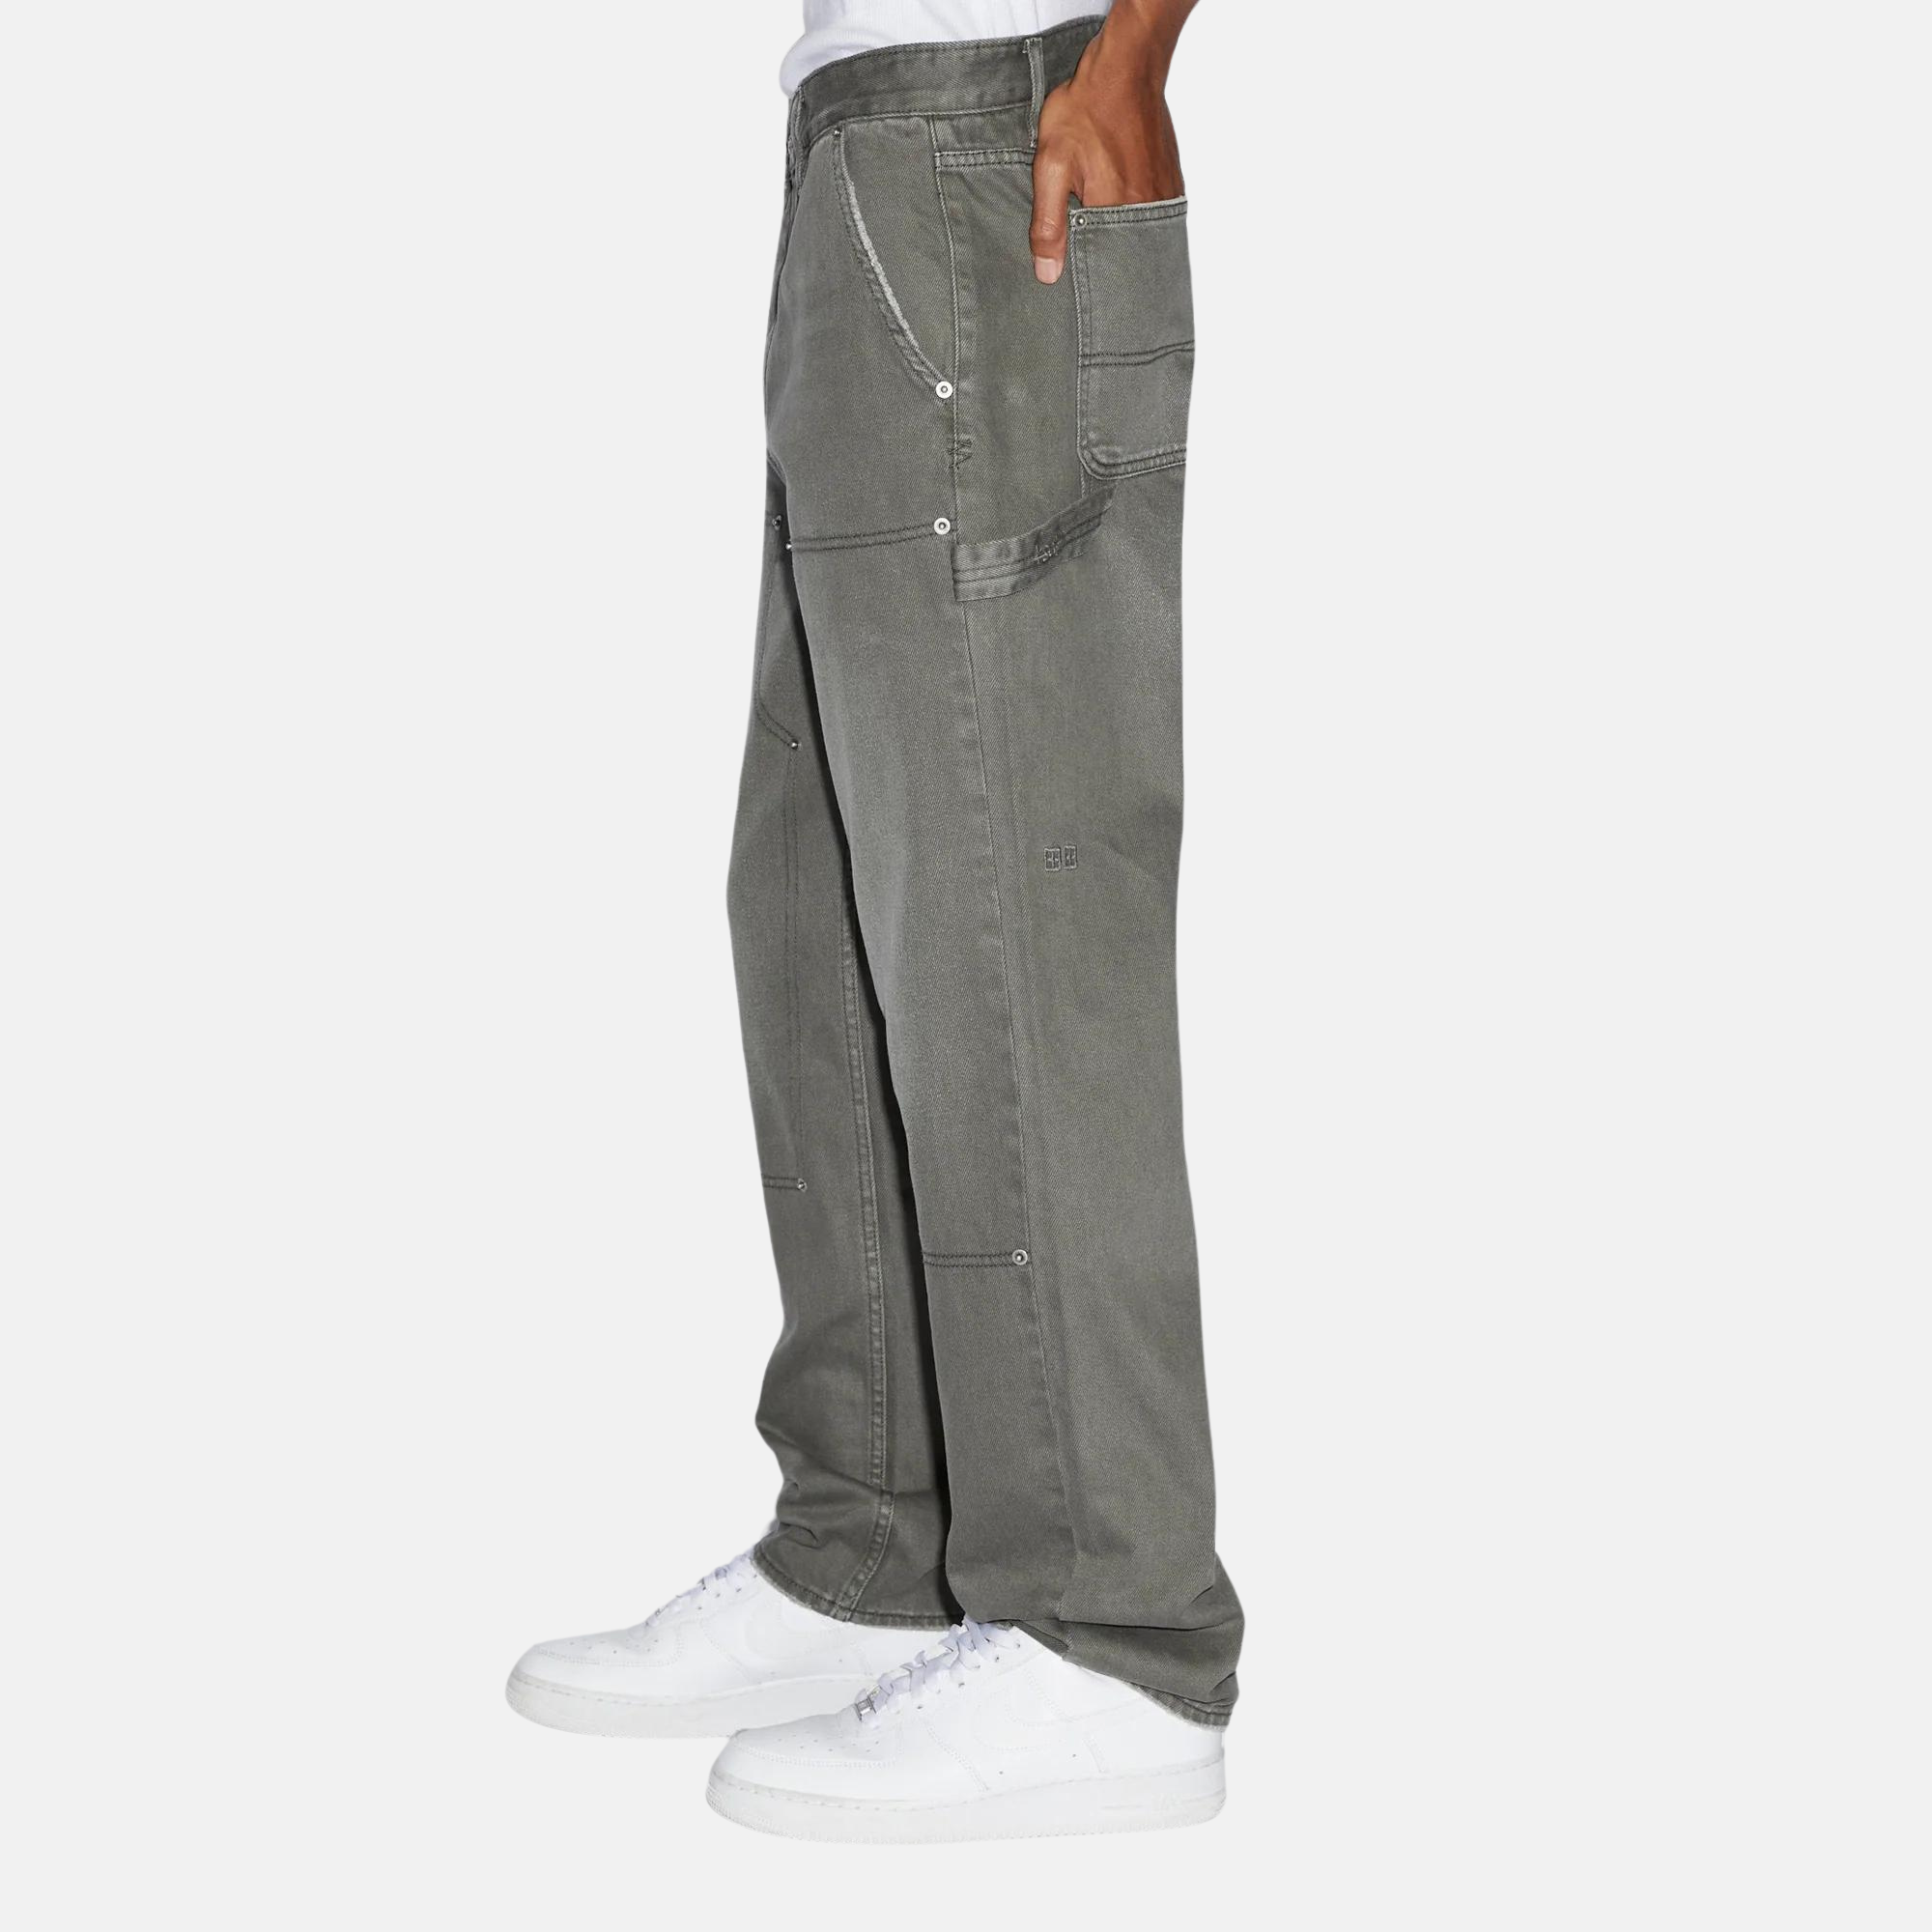 Ksubi Ghosted Operator Pant Surplus Jeans